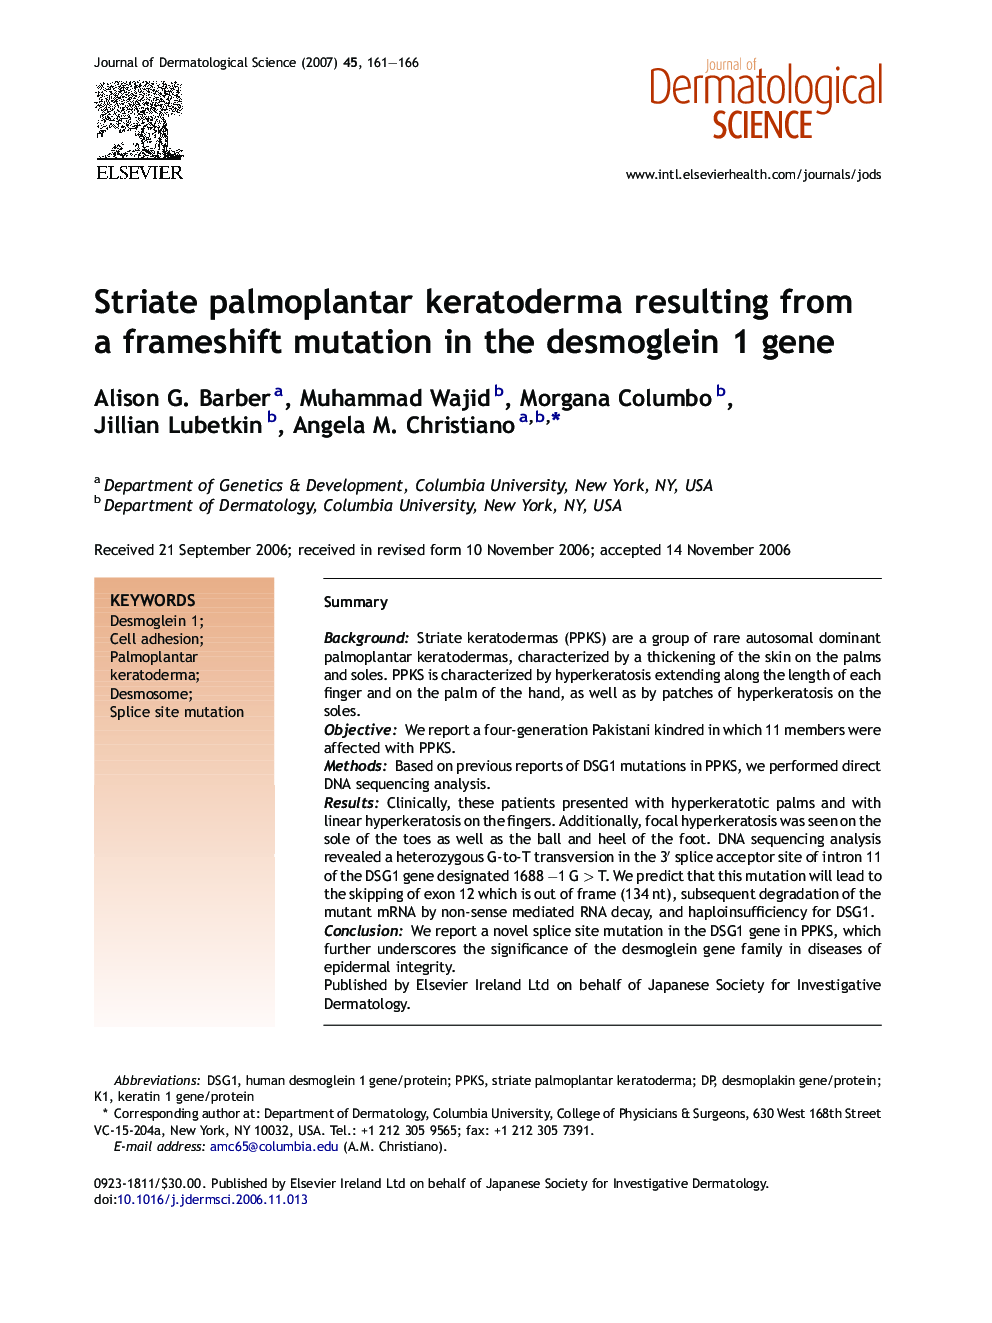 Striate palmoplantar keratoderma resulting from a frameshift mutation in the desmoglein 1 gene